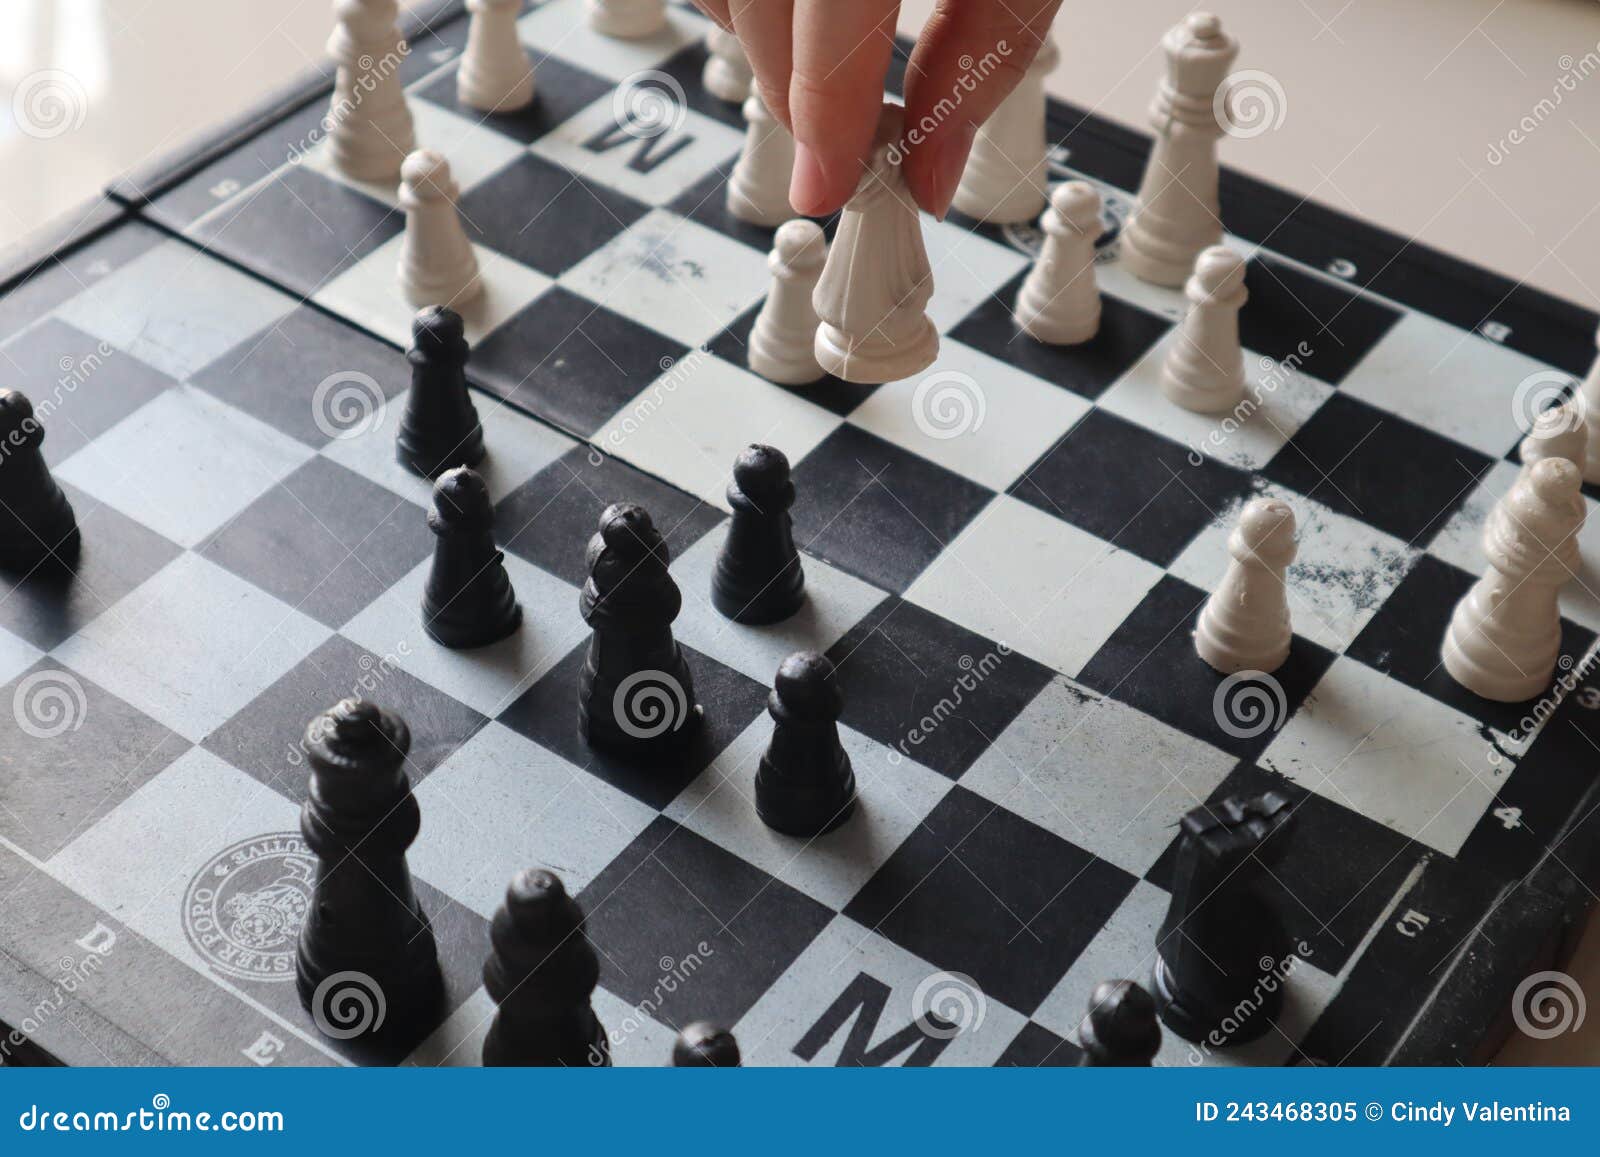 Perto da mulher movendo as peças de xadrez a bordo durante a